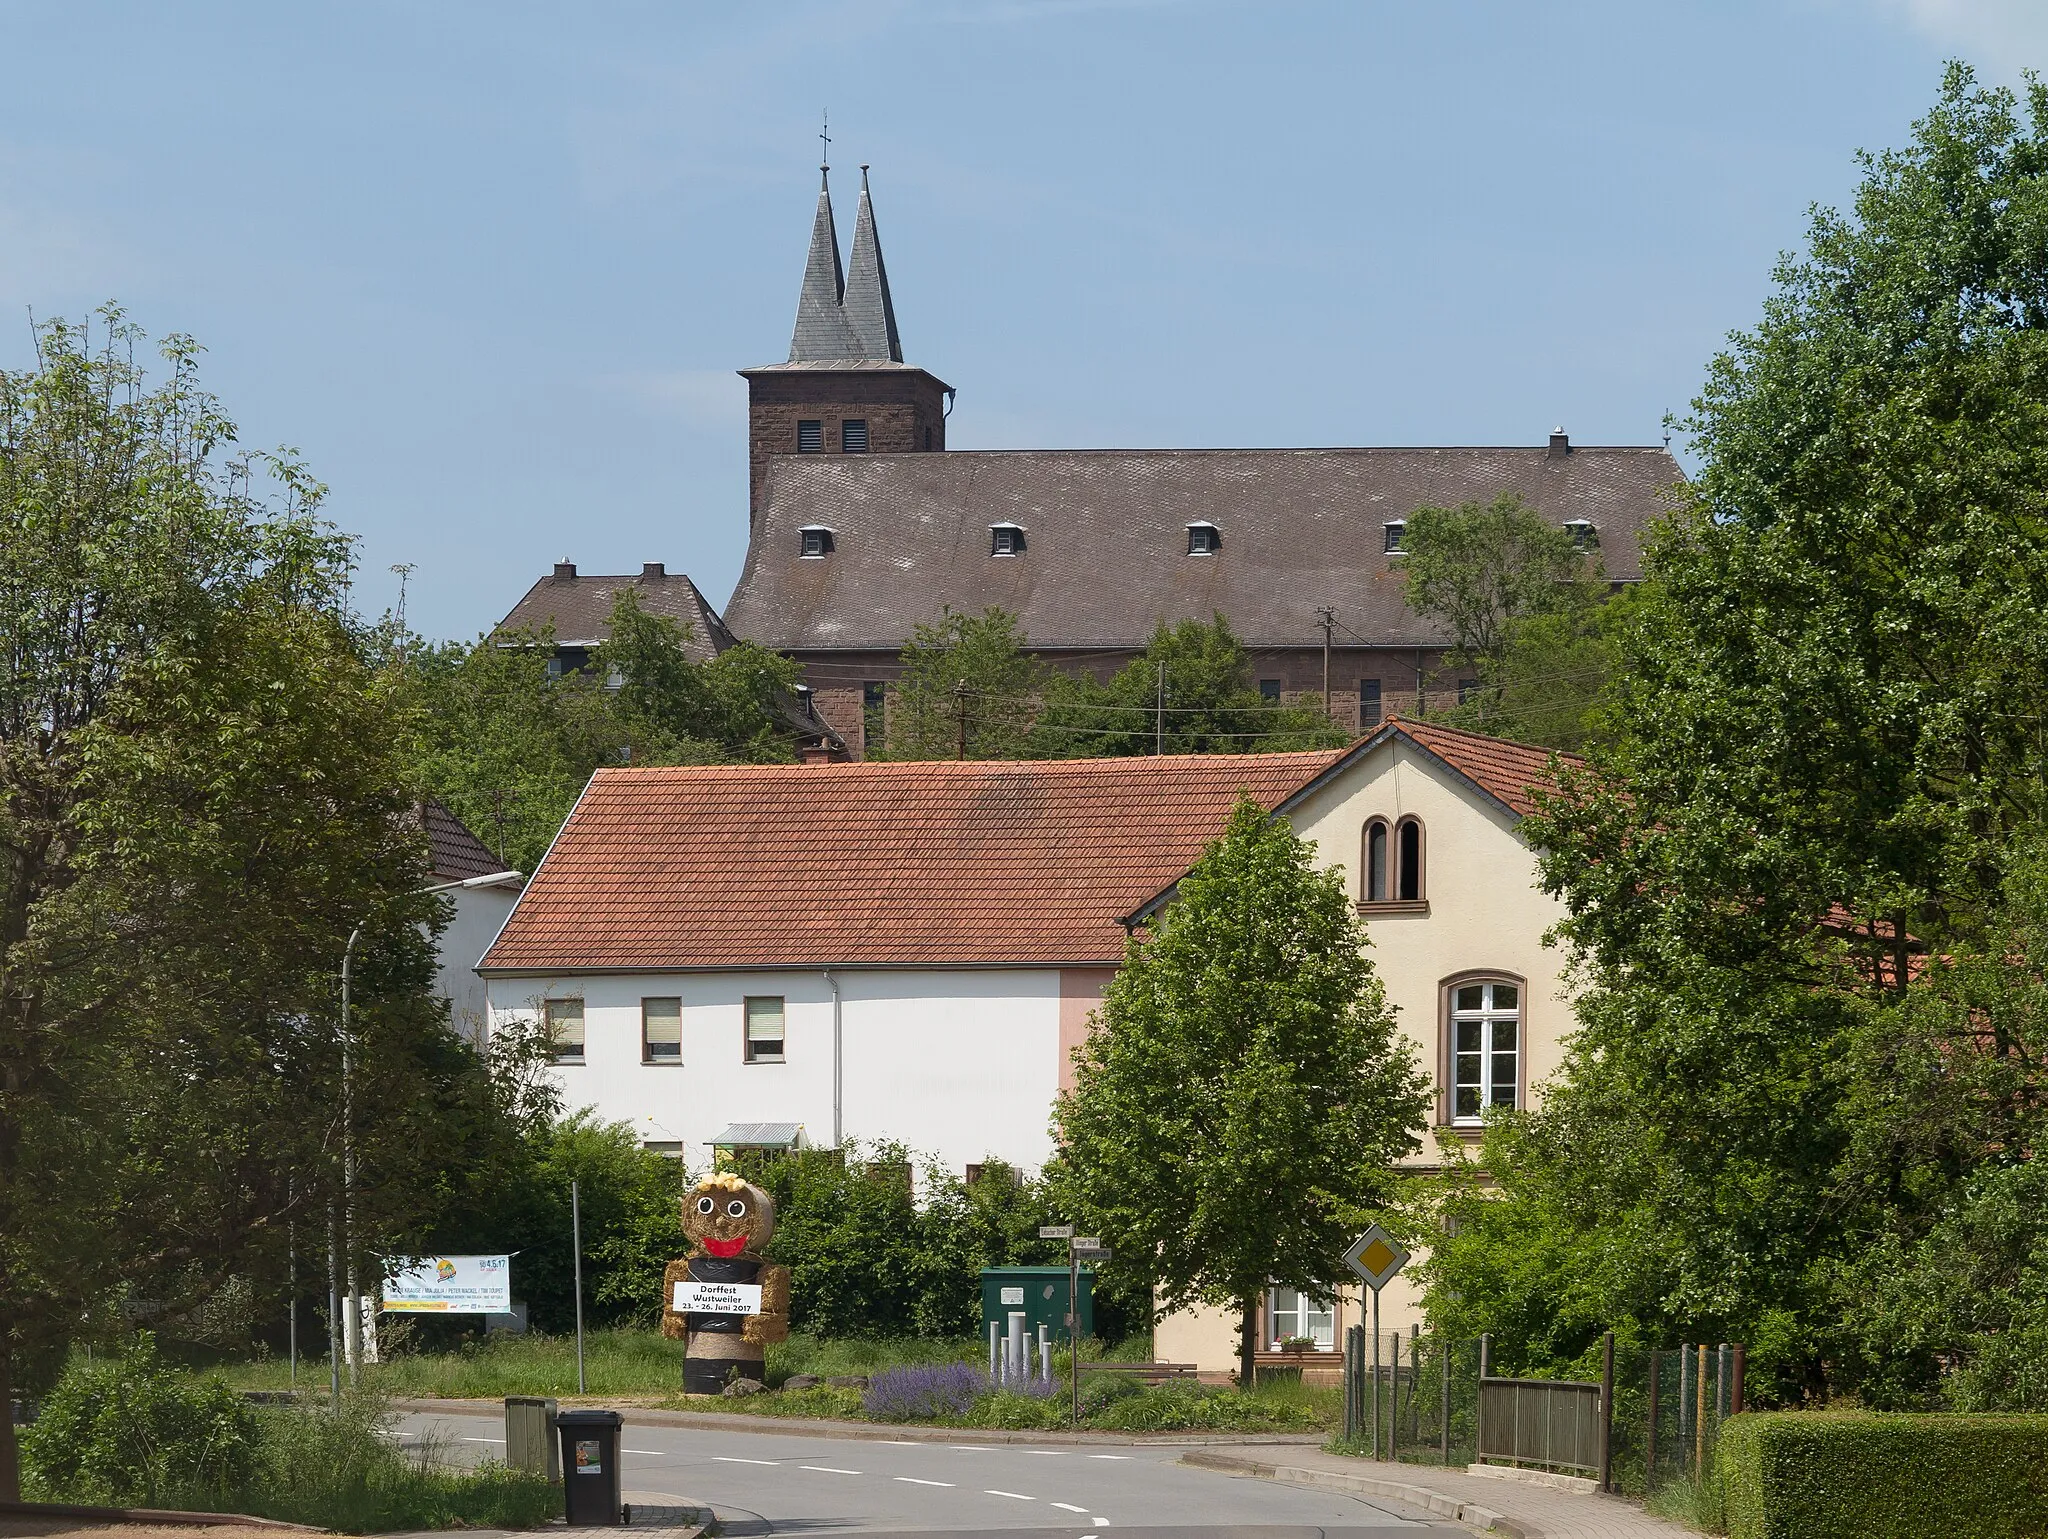 Photo showing: Wustweiler, Illingen, Saarland, Germany, catholic church Herz-Jesu